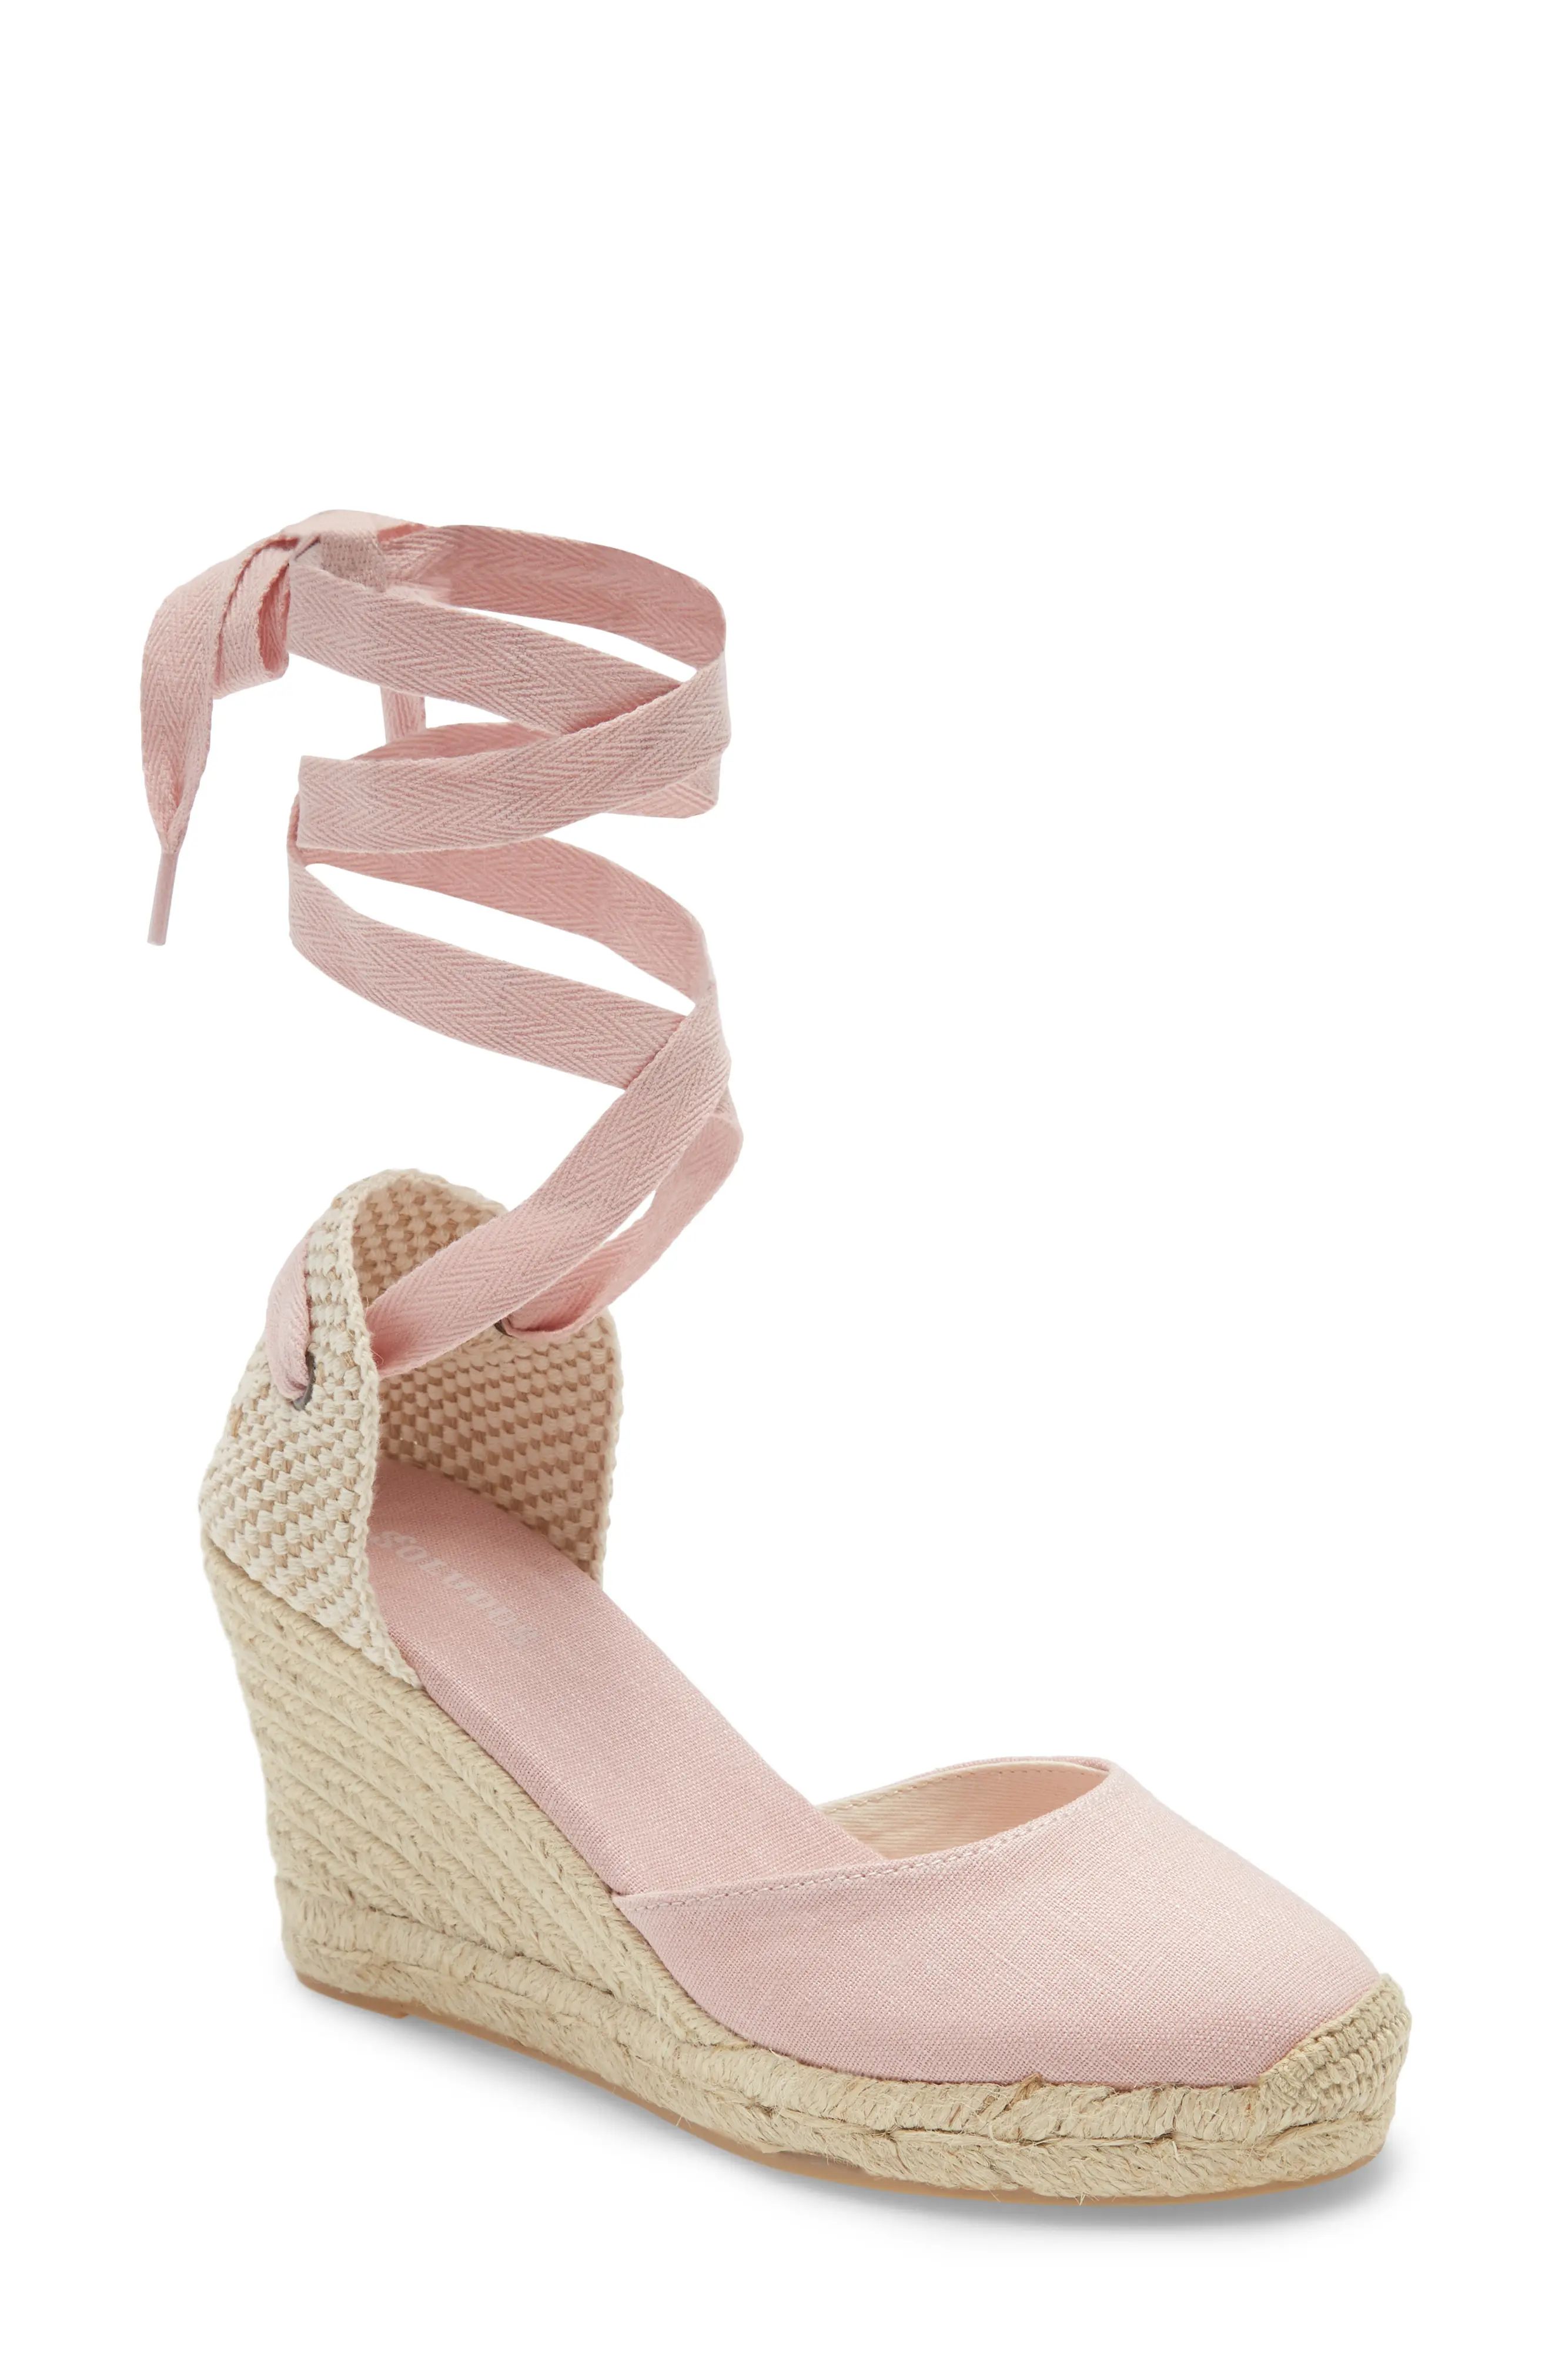 Soludos Wedge Lace-Up Espadrille Sandal in Soft Pink at Nordstrom, Size 11 | Nordstrom